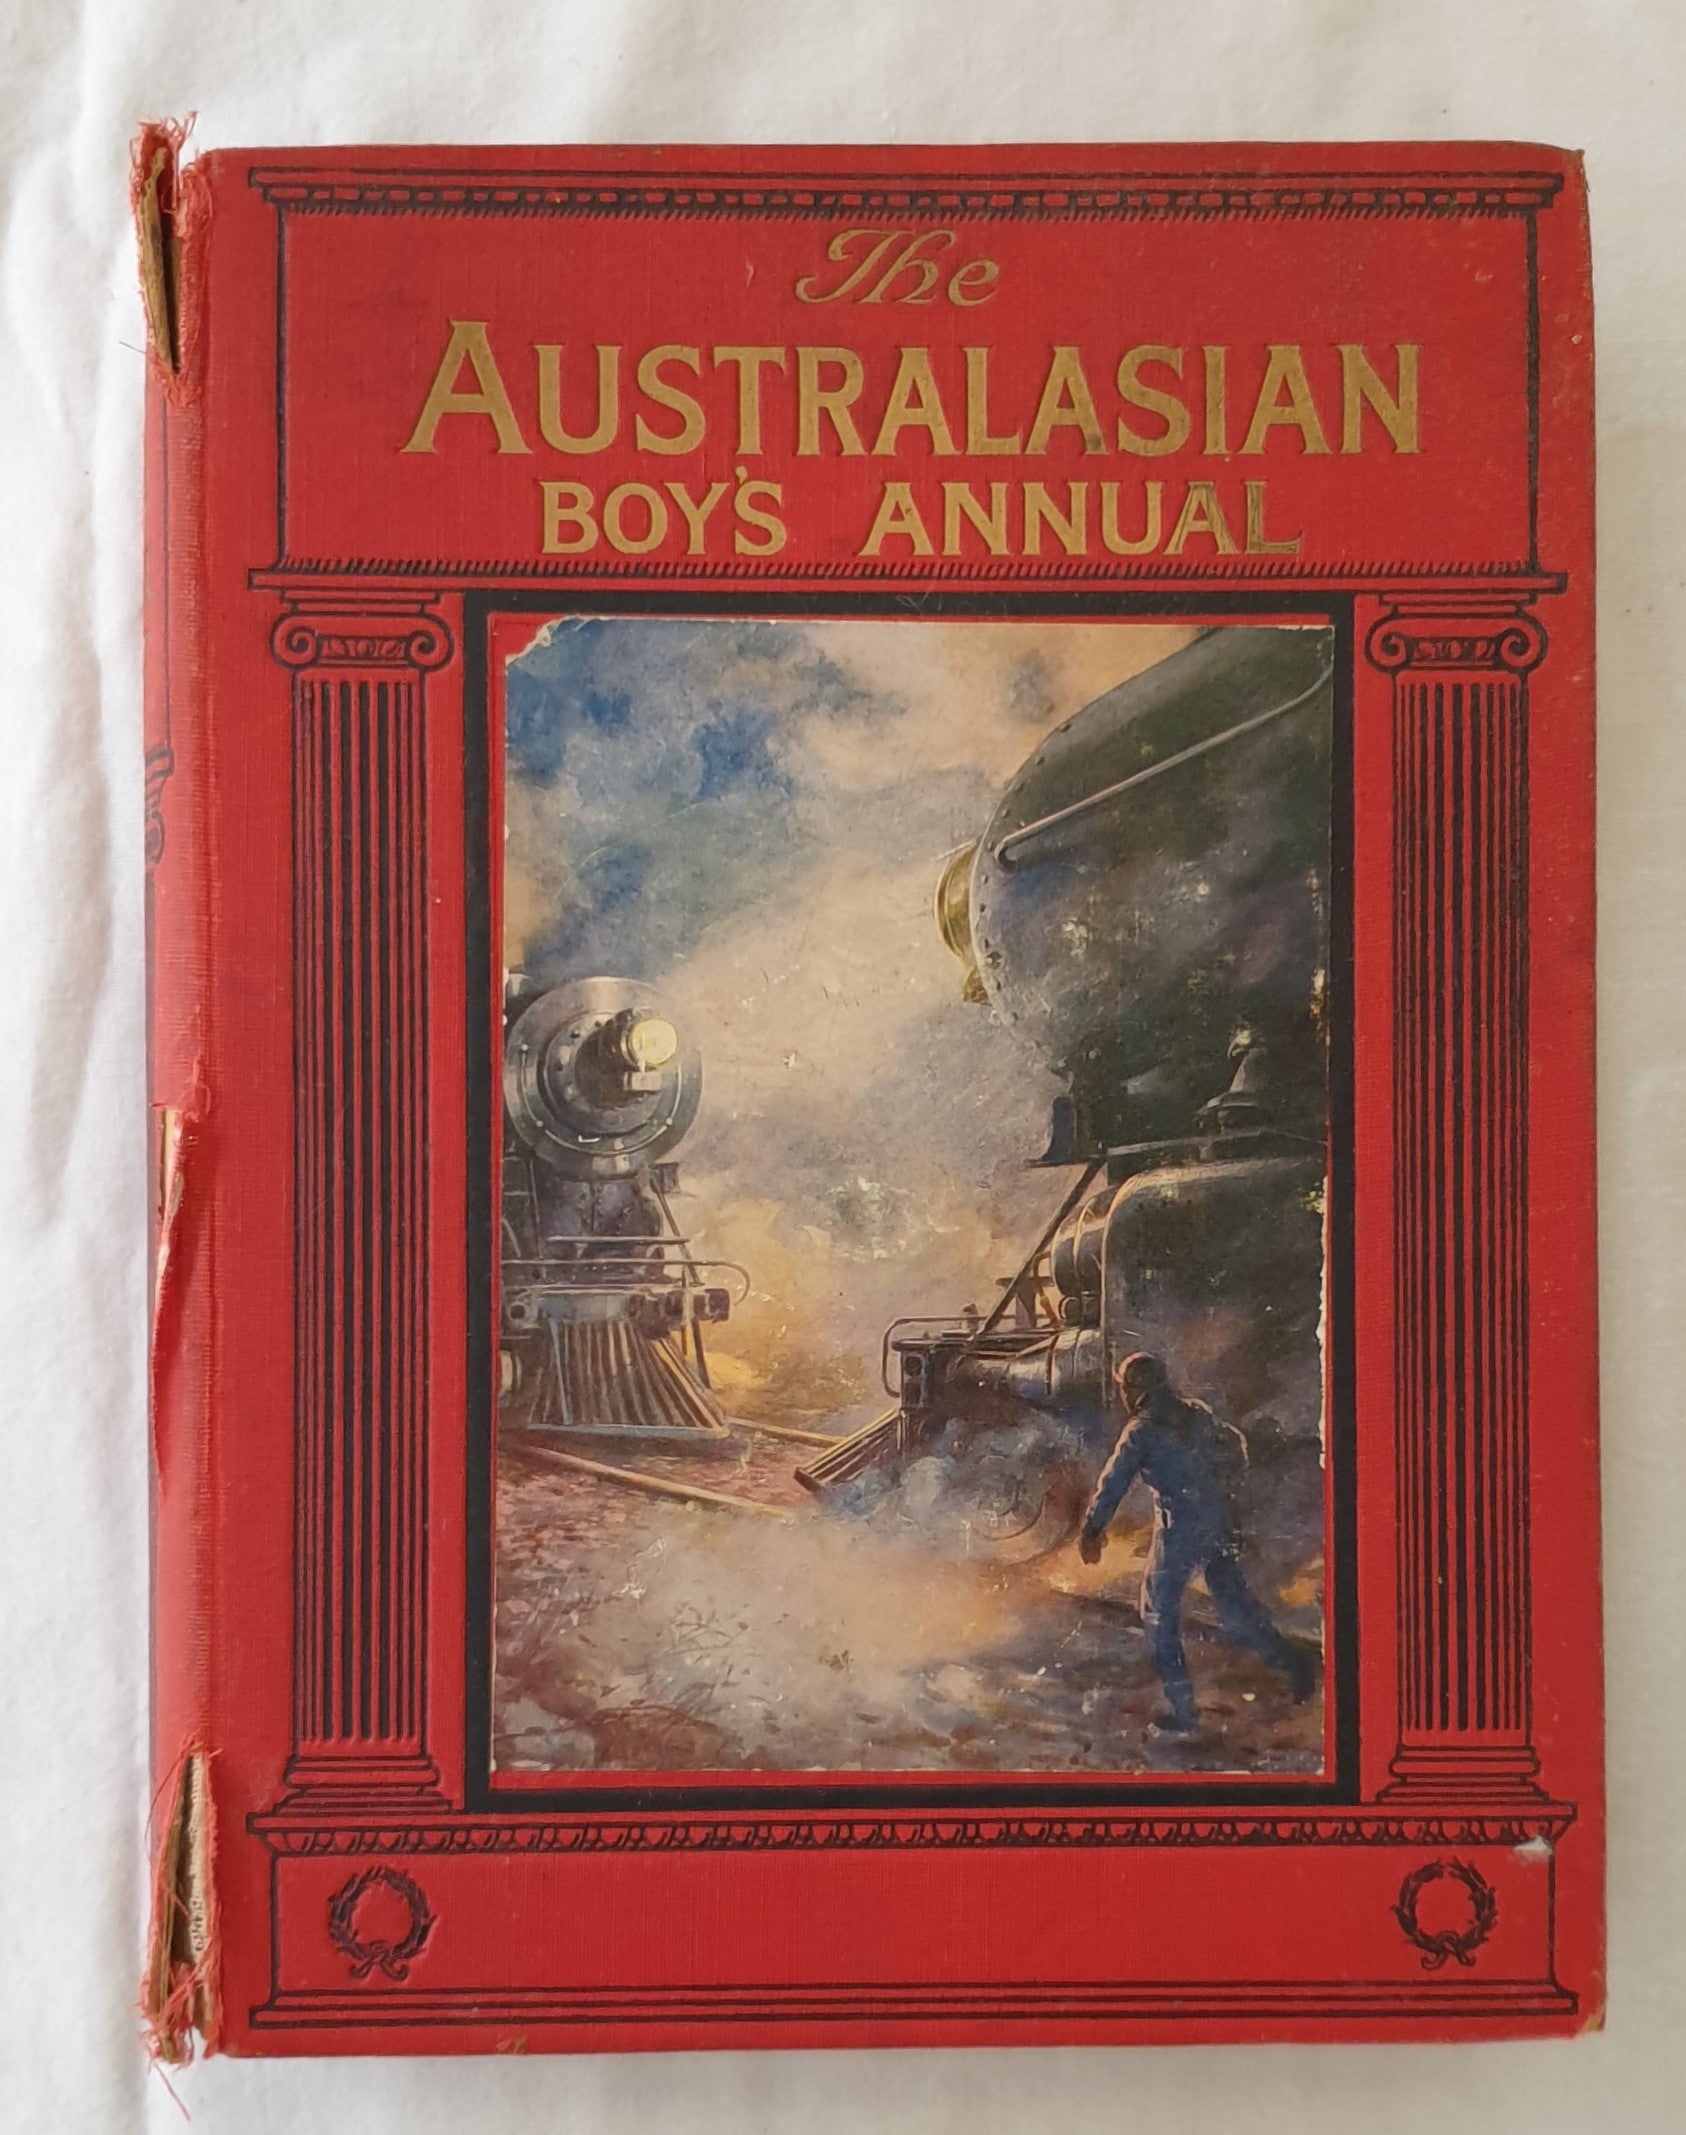 The Australasian Boy’s Annual